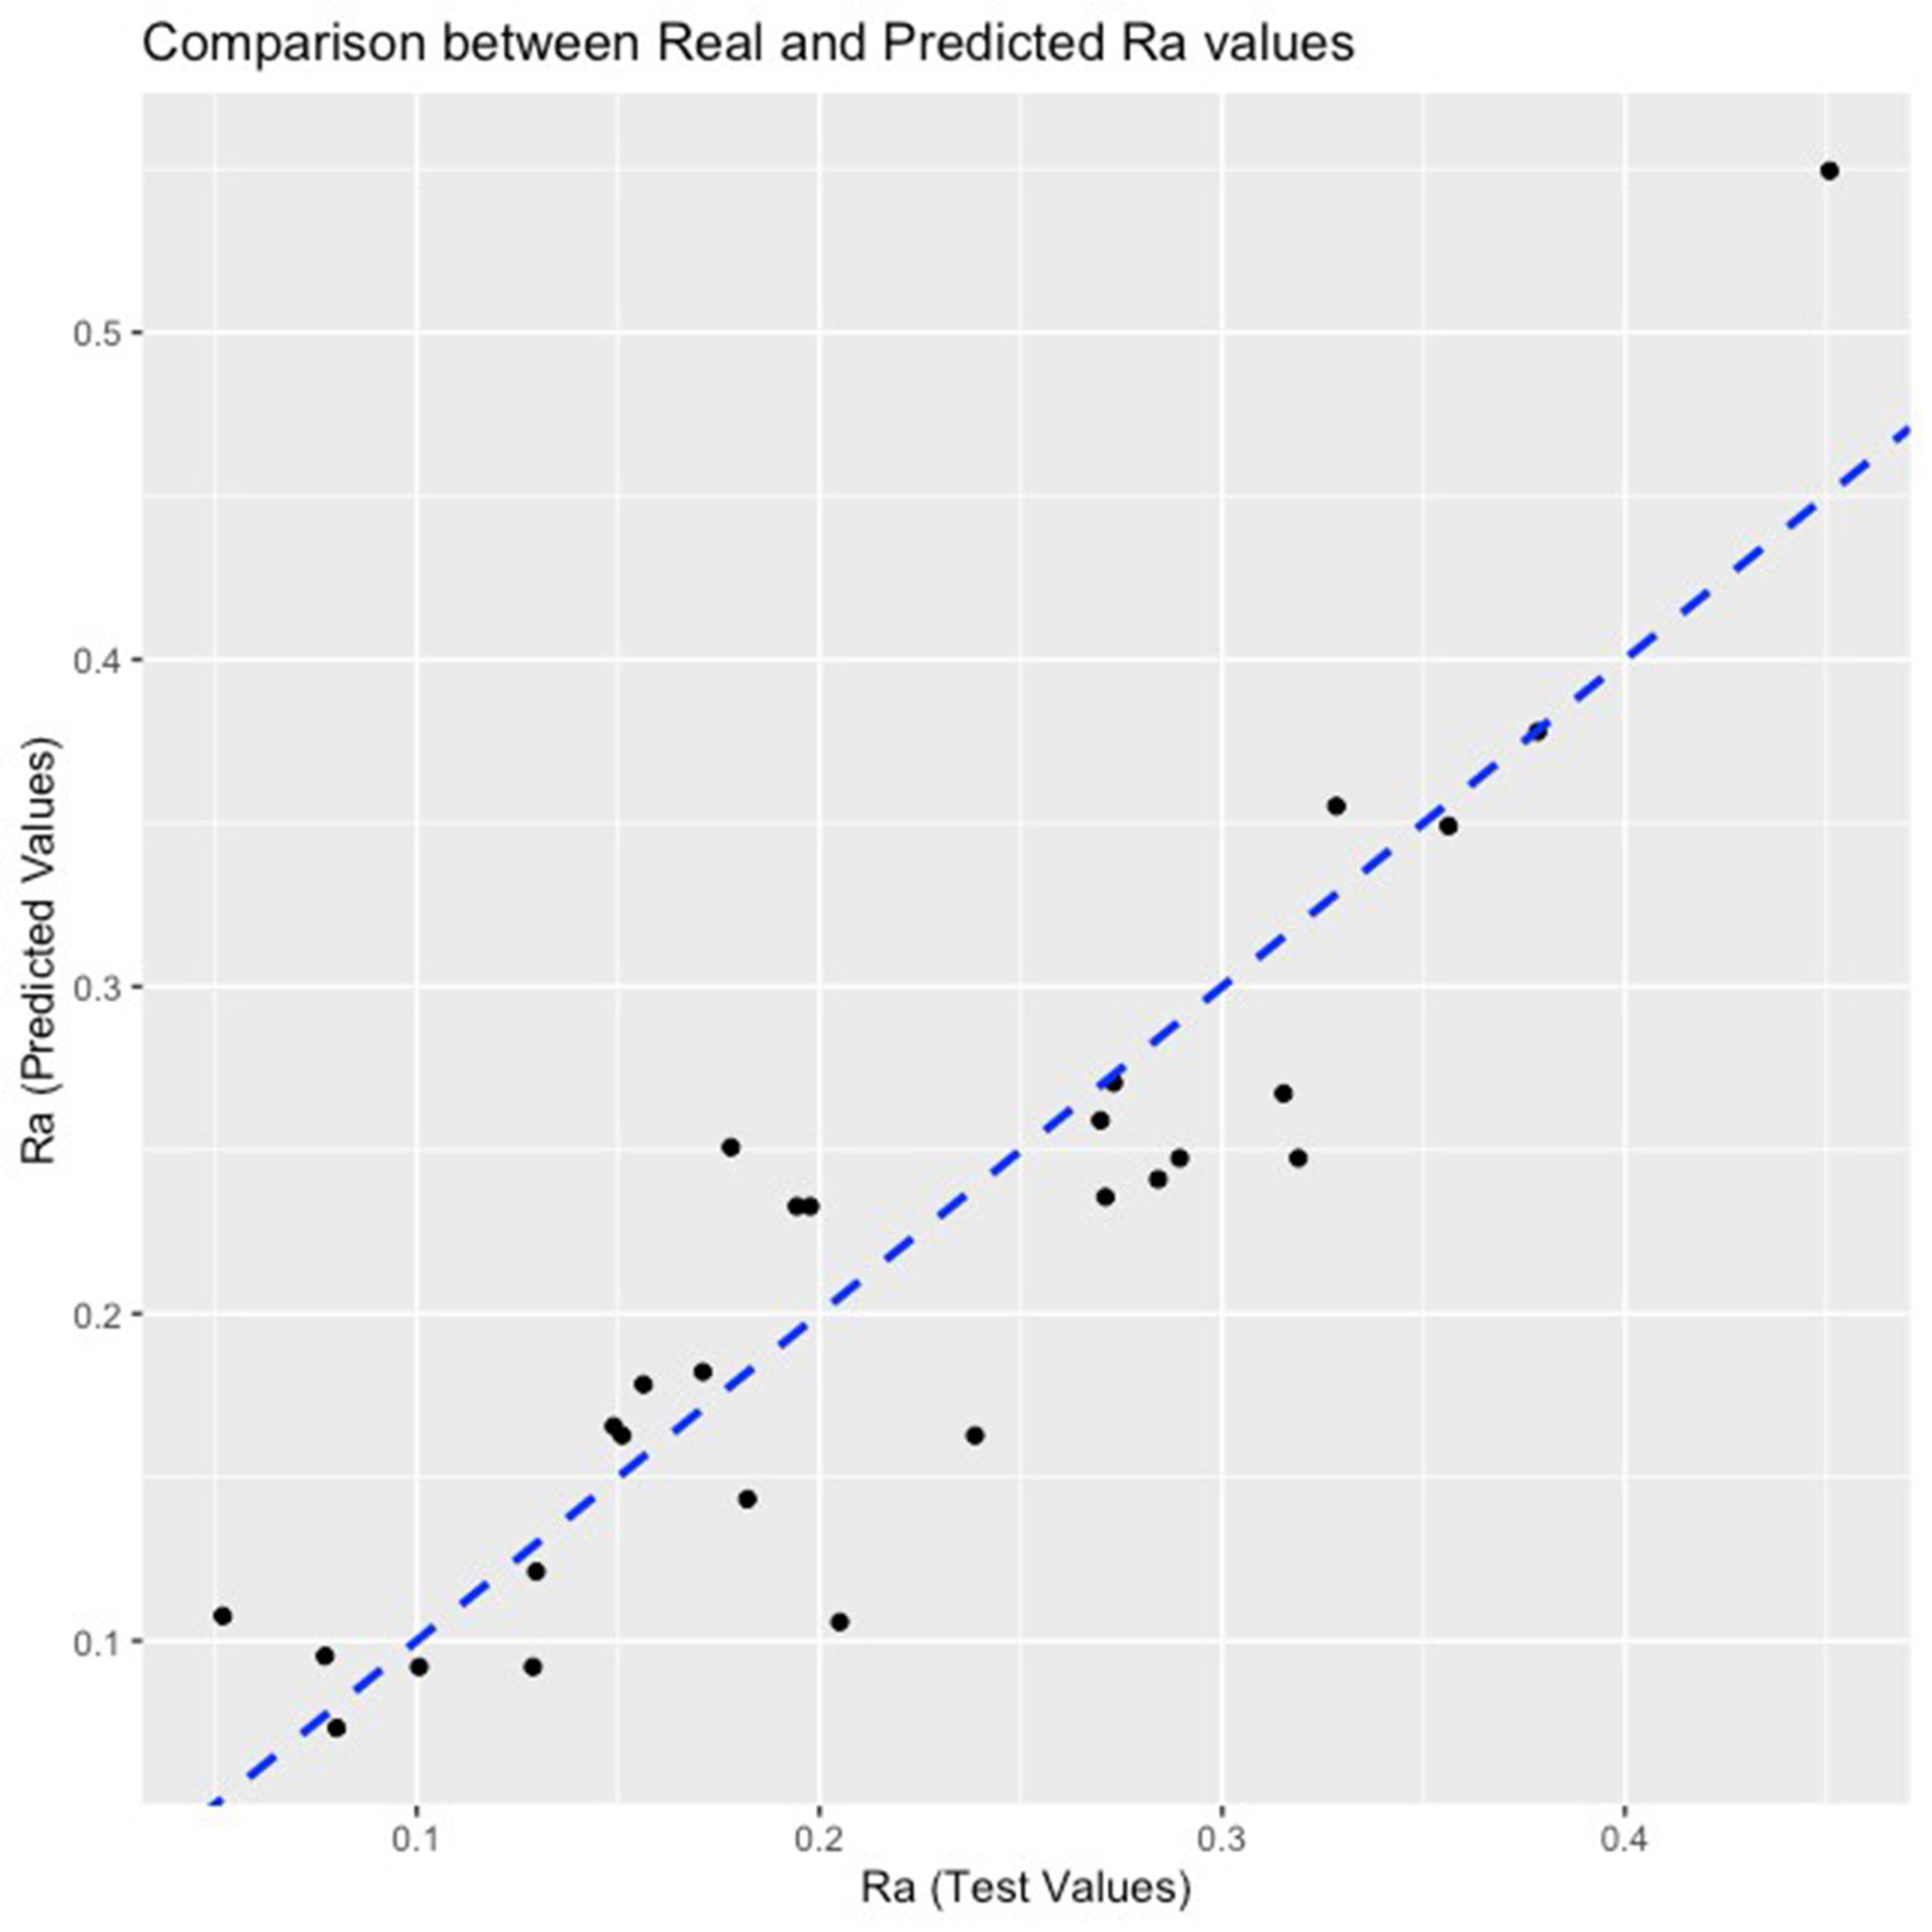 Real vs Predictive Ra values